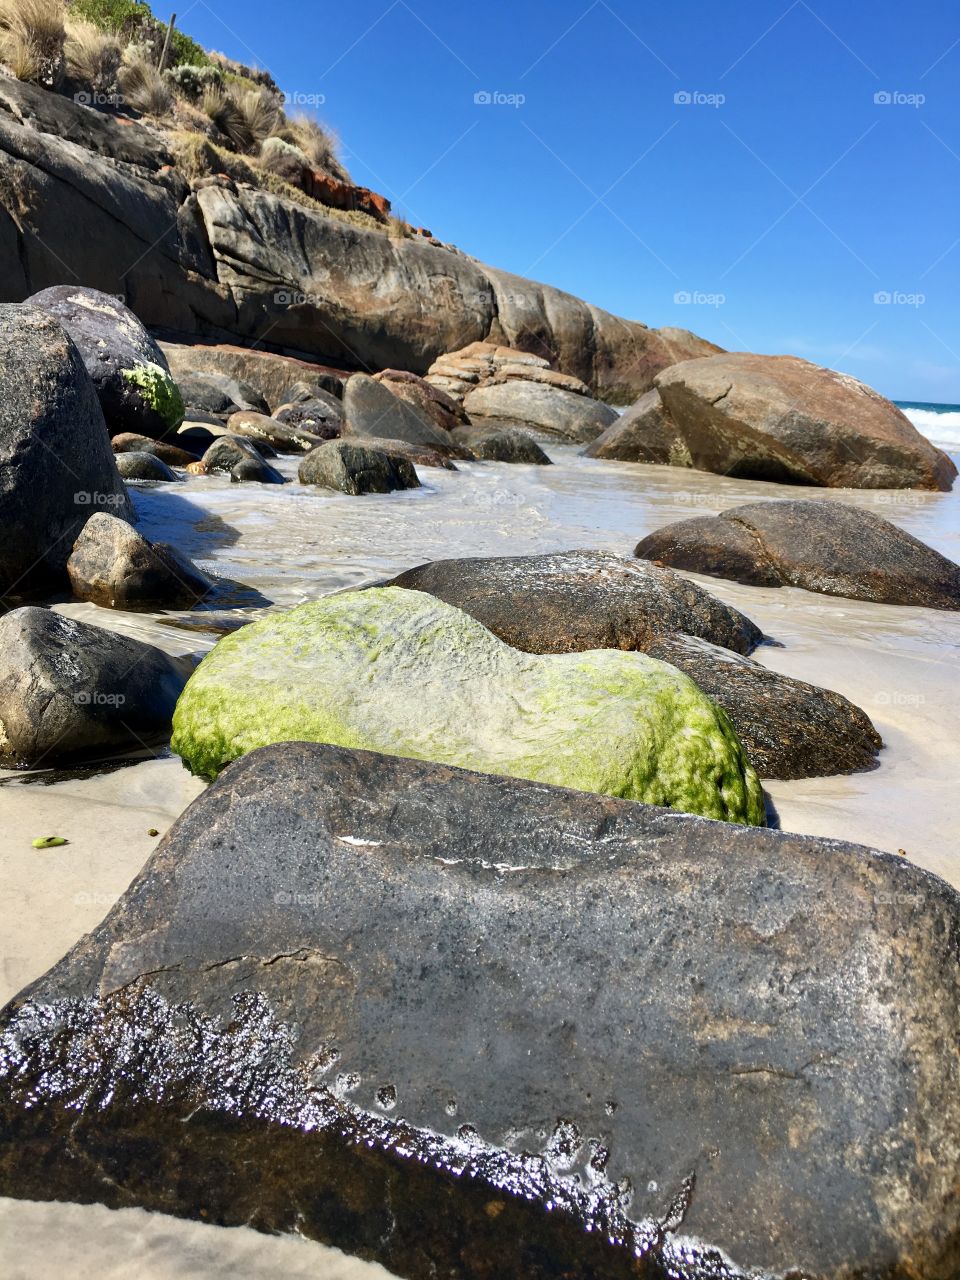 Ocean algae on rocks at low tide south Australia low angle image 